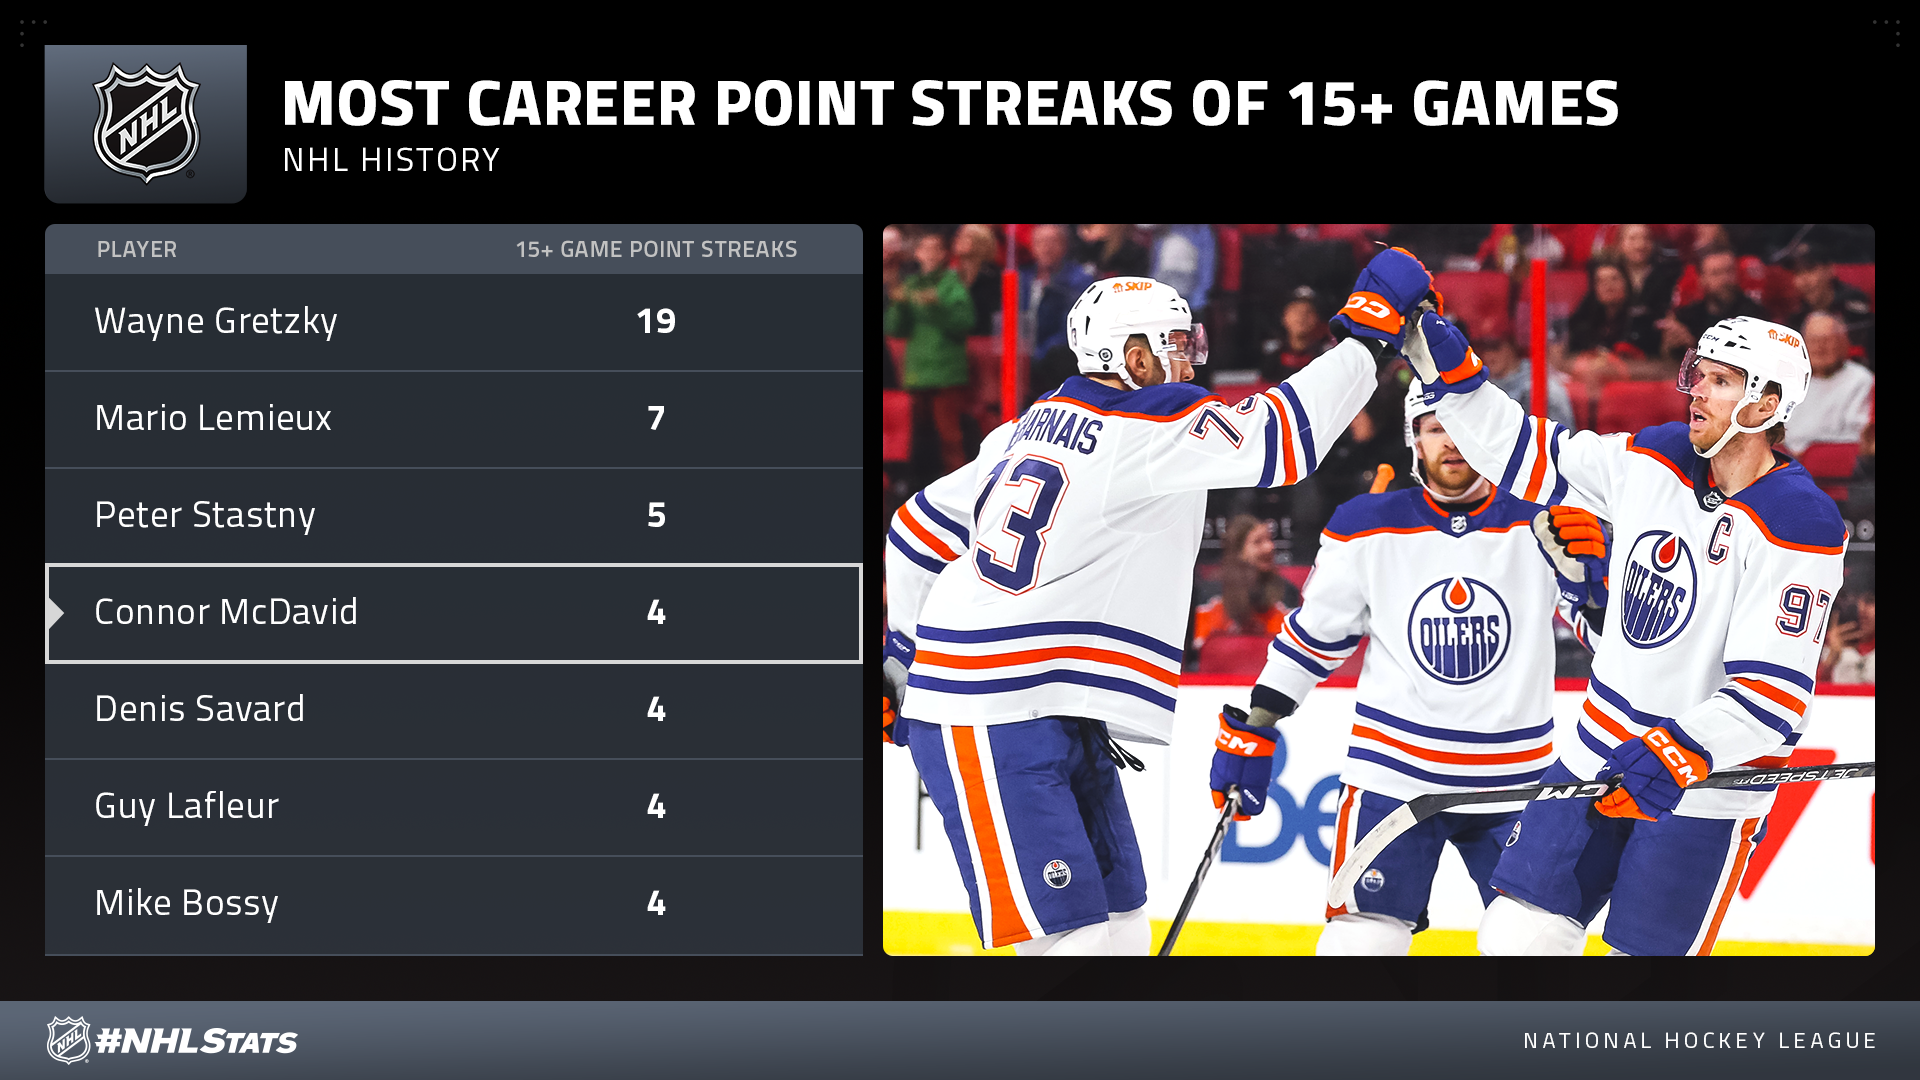 McDavid scores twice, surpasses milestone 200th goal in Oilers